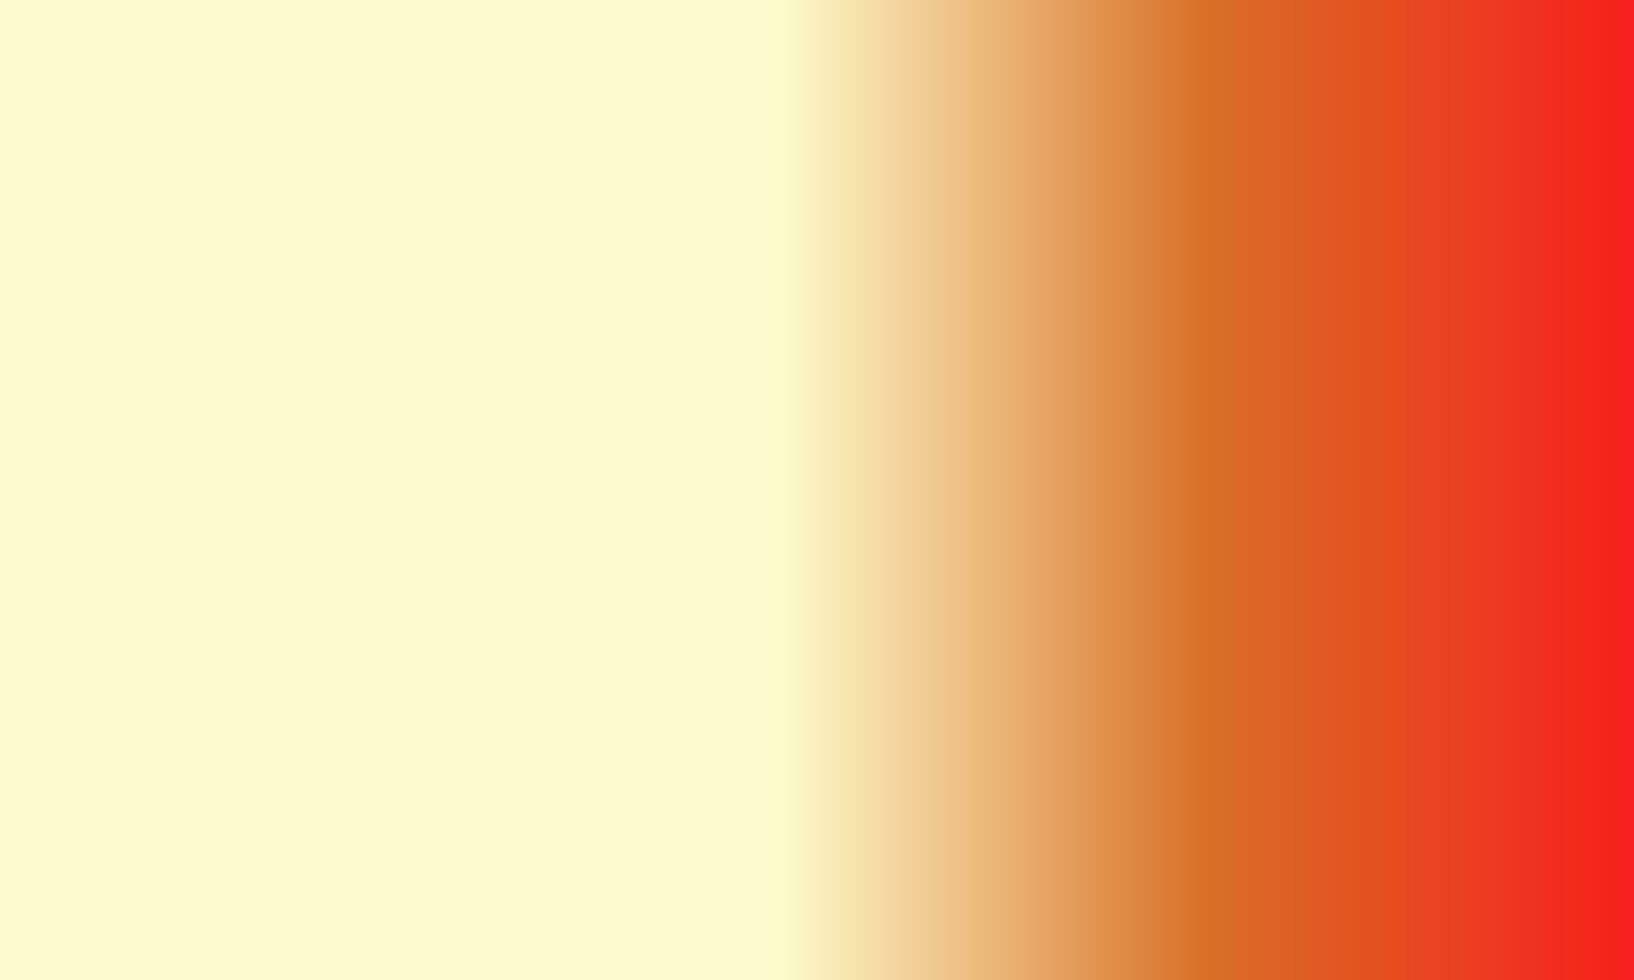 Design simple Lemonchiffon yellow,red and orange gradient color illustration background photo